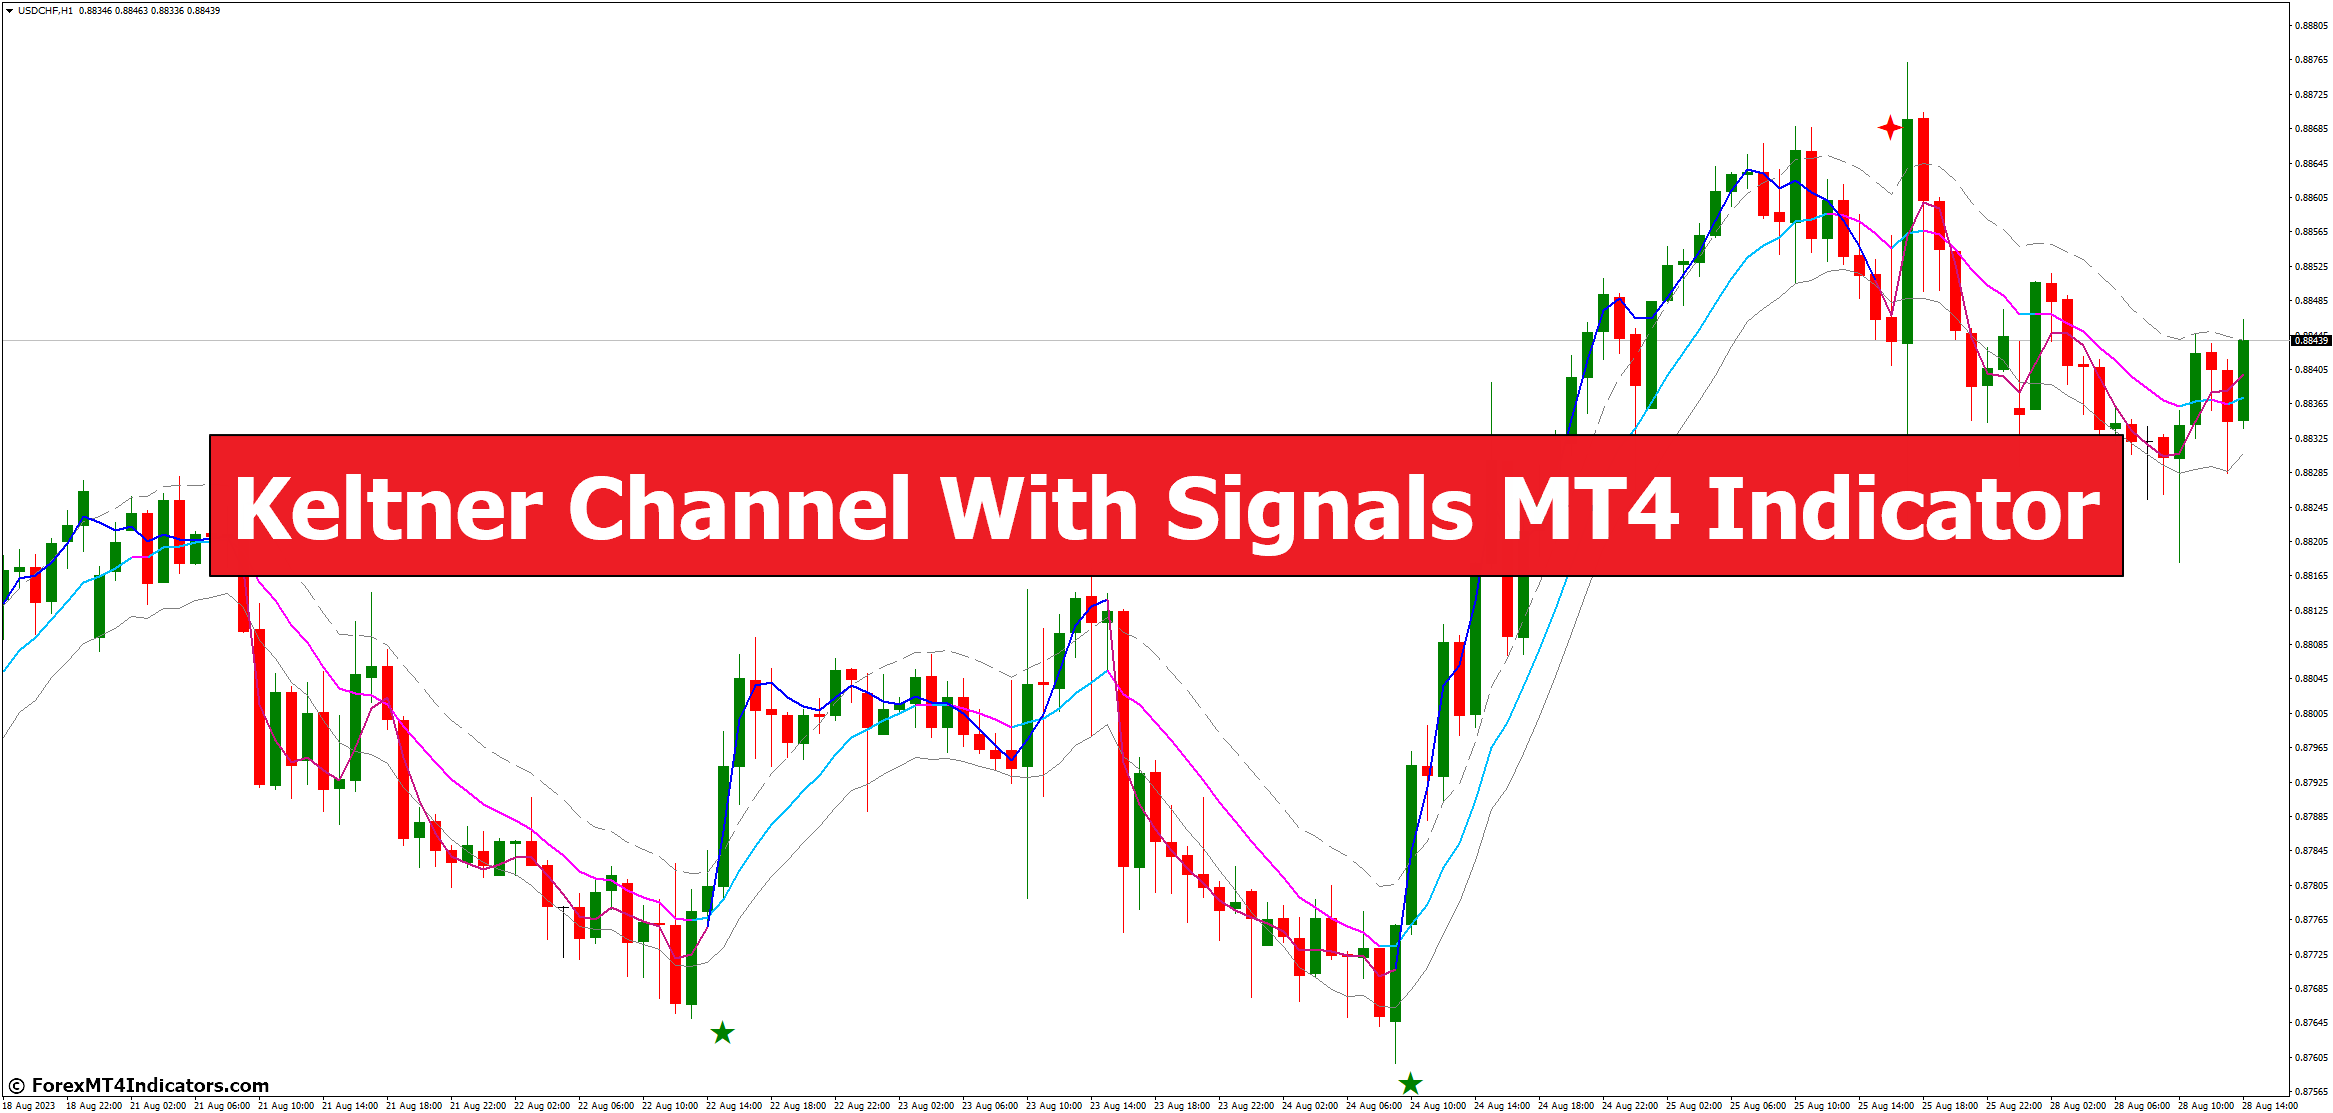 Keltner Channel With Signals MT4 Indicator